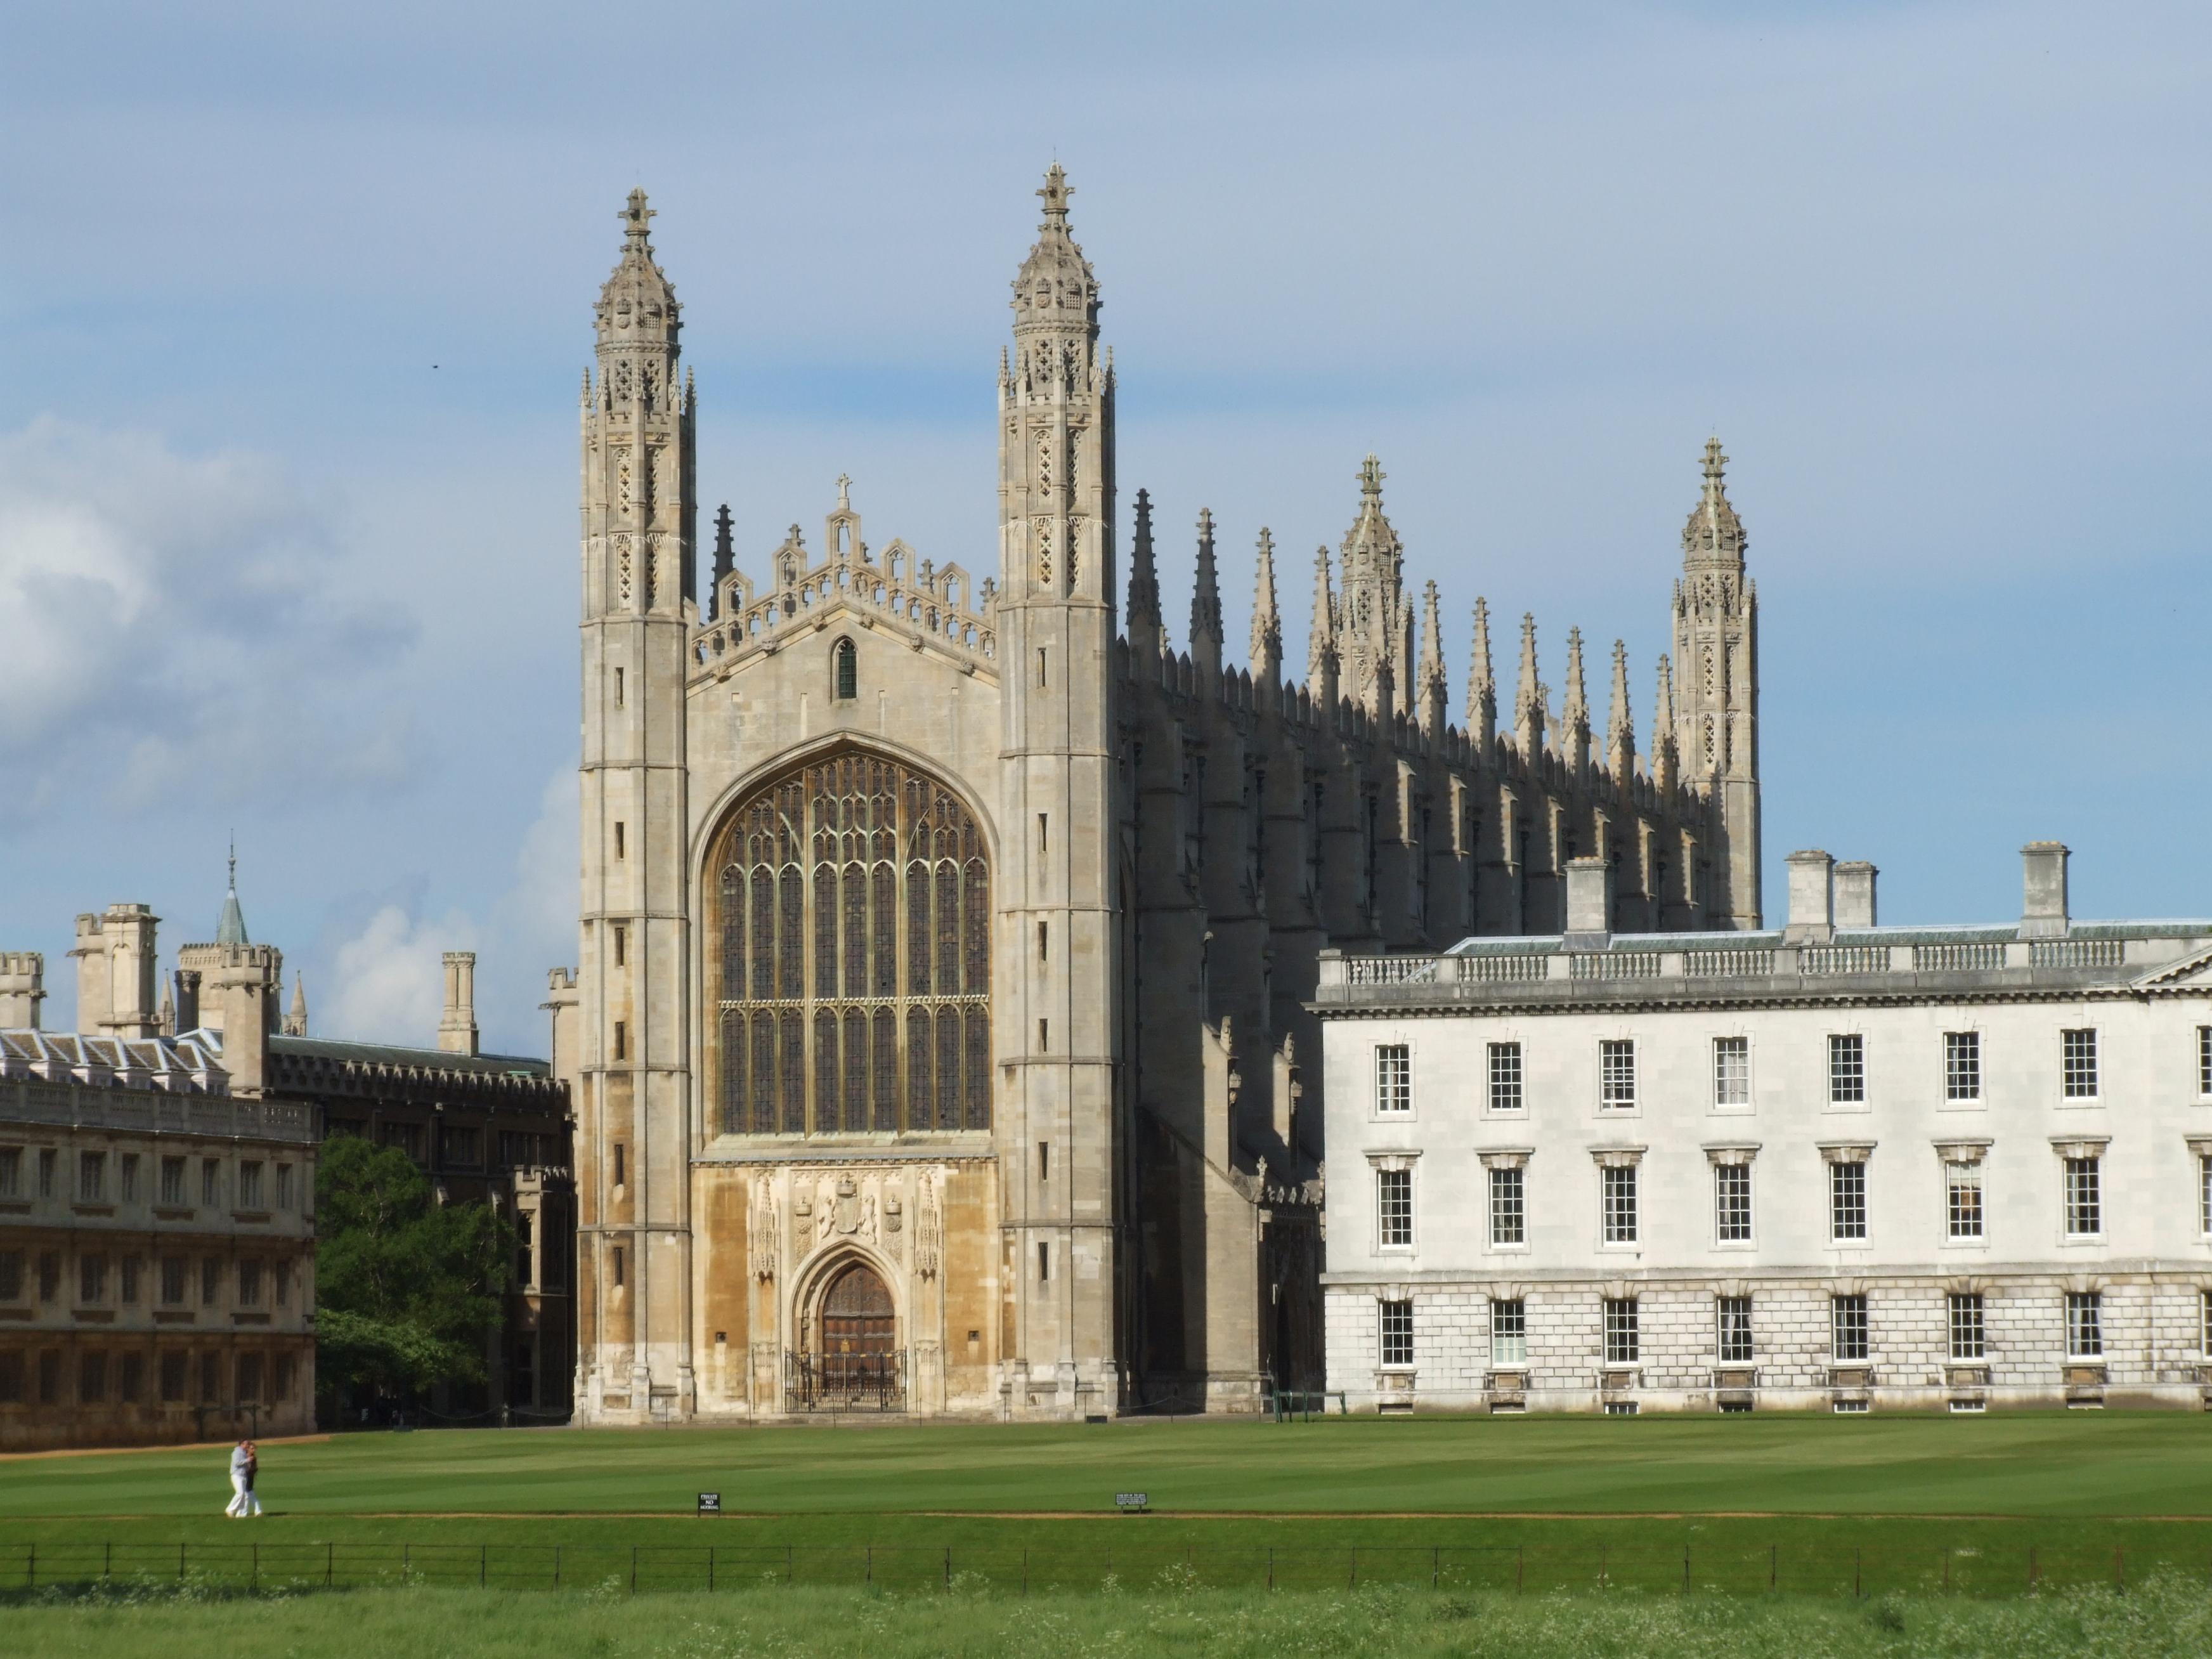 King's Chapel must be demolished in 2015 - University of Cambridge